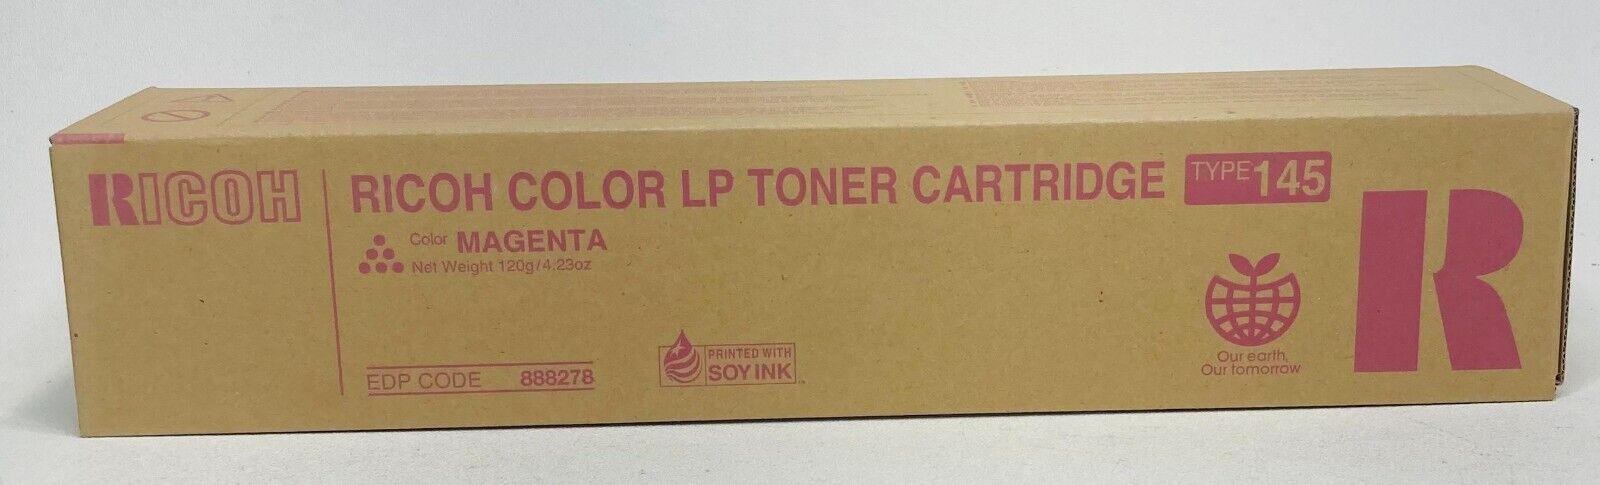 Ricoh Color LP Toner Cartridge Type 145 Magenta EDP Code 888278 NEW SEALED